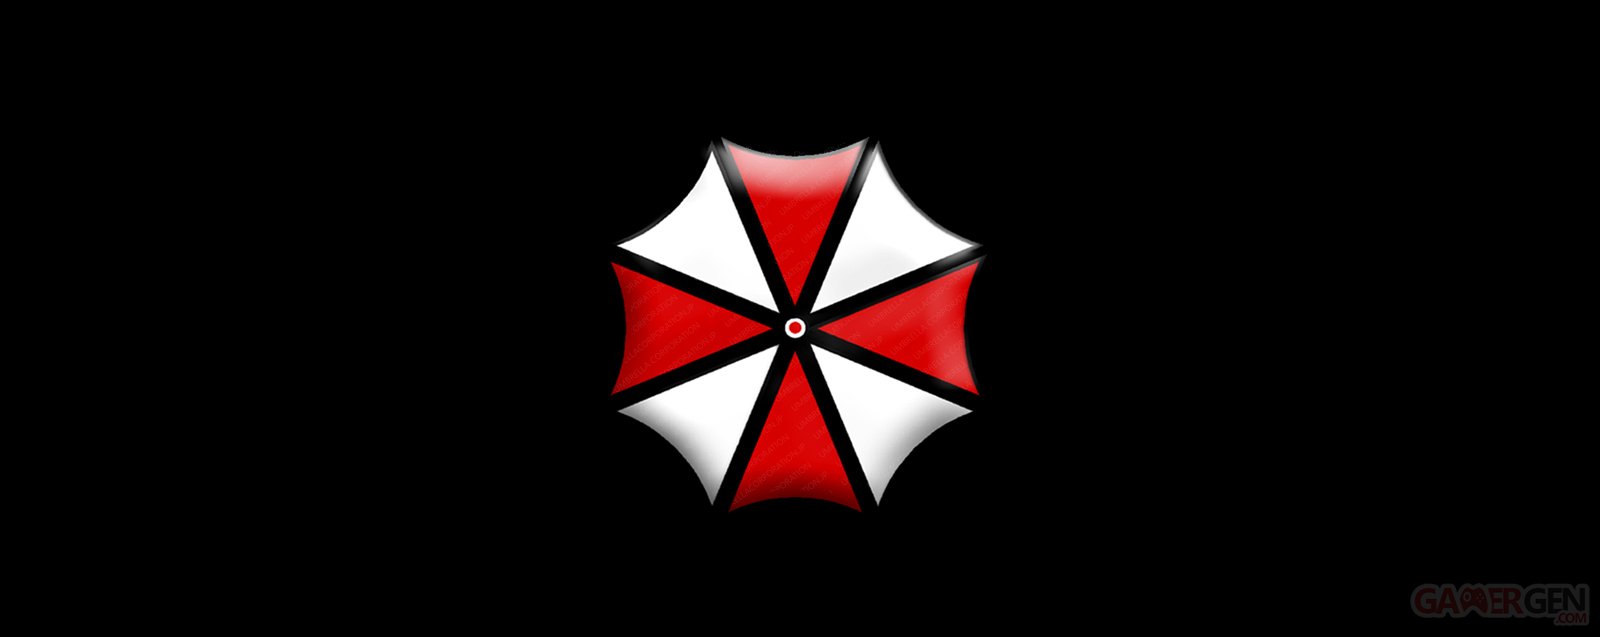 re umbrella corps